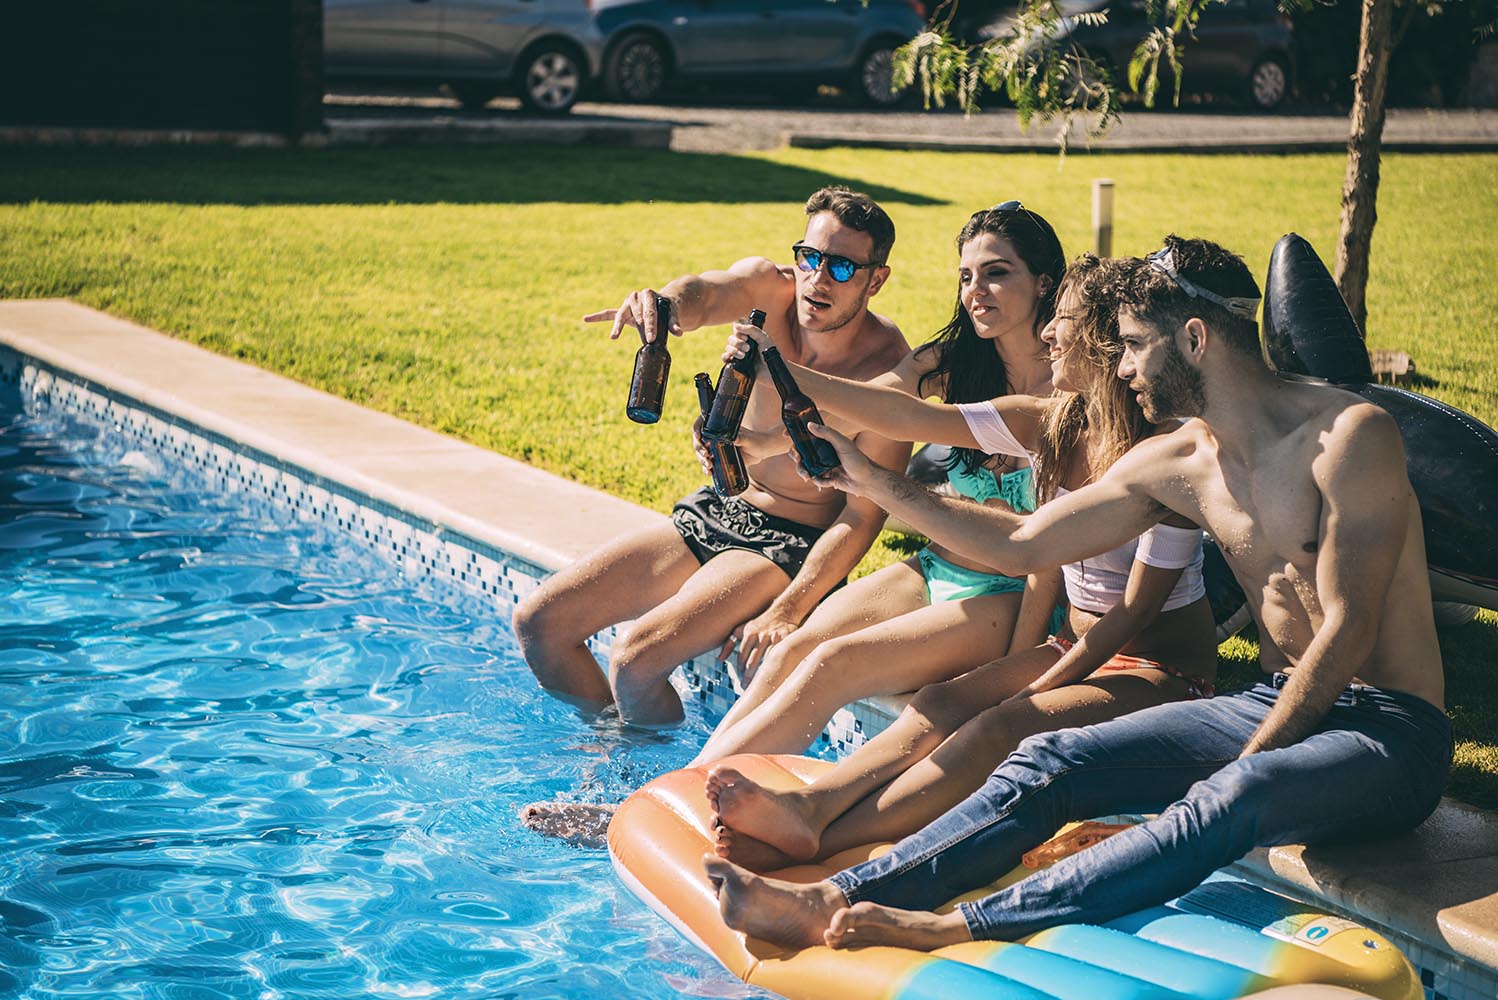 Friends drinking beer on poolside